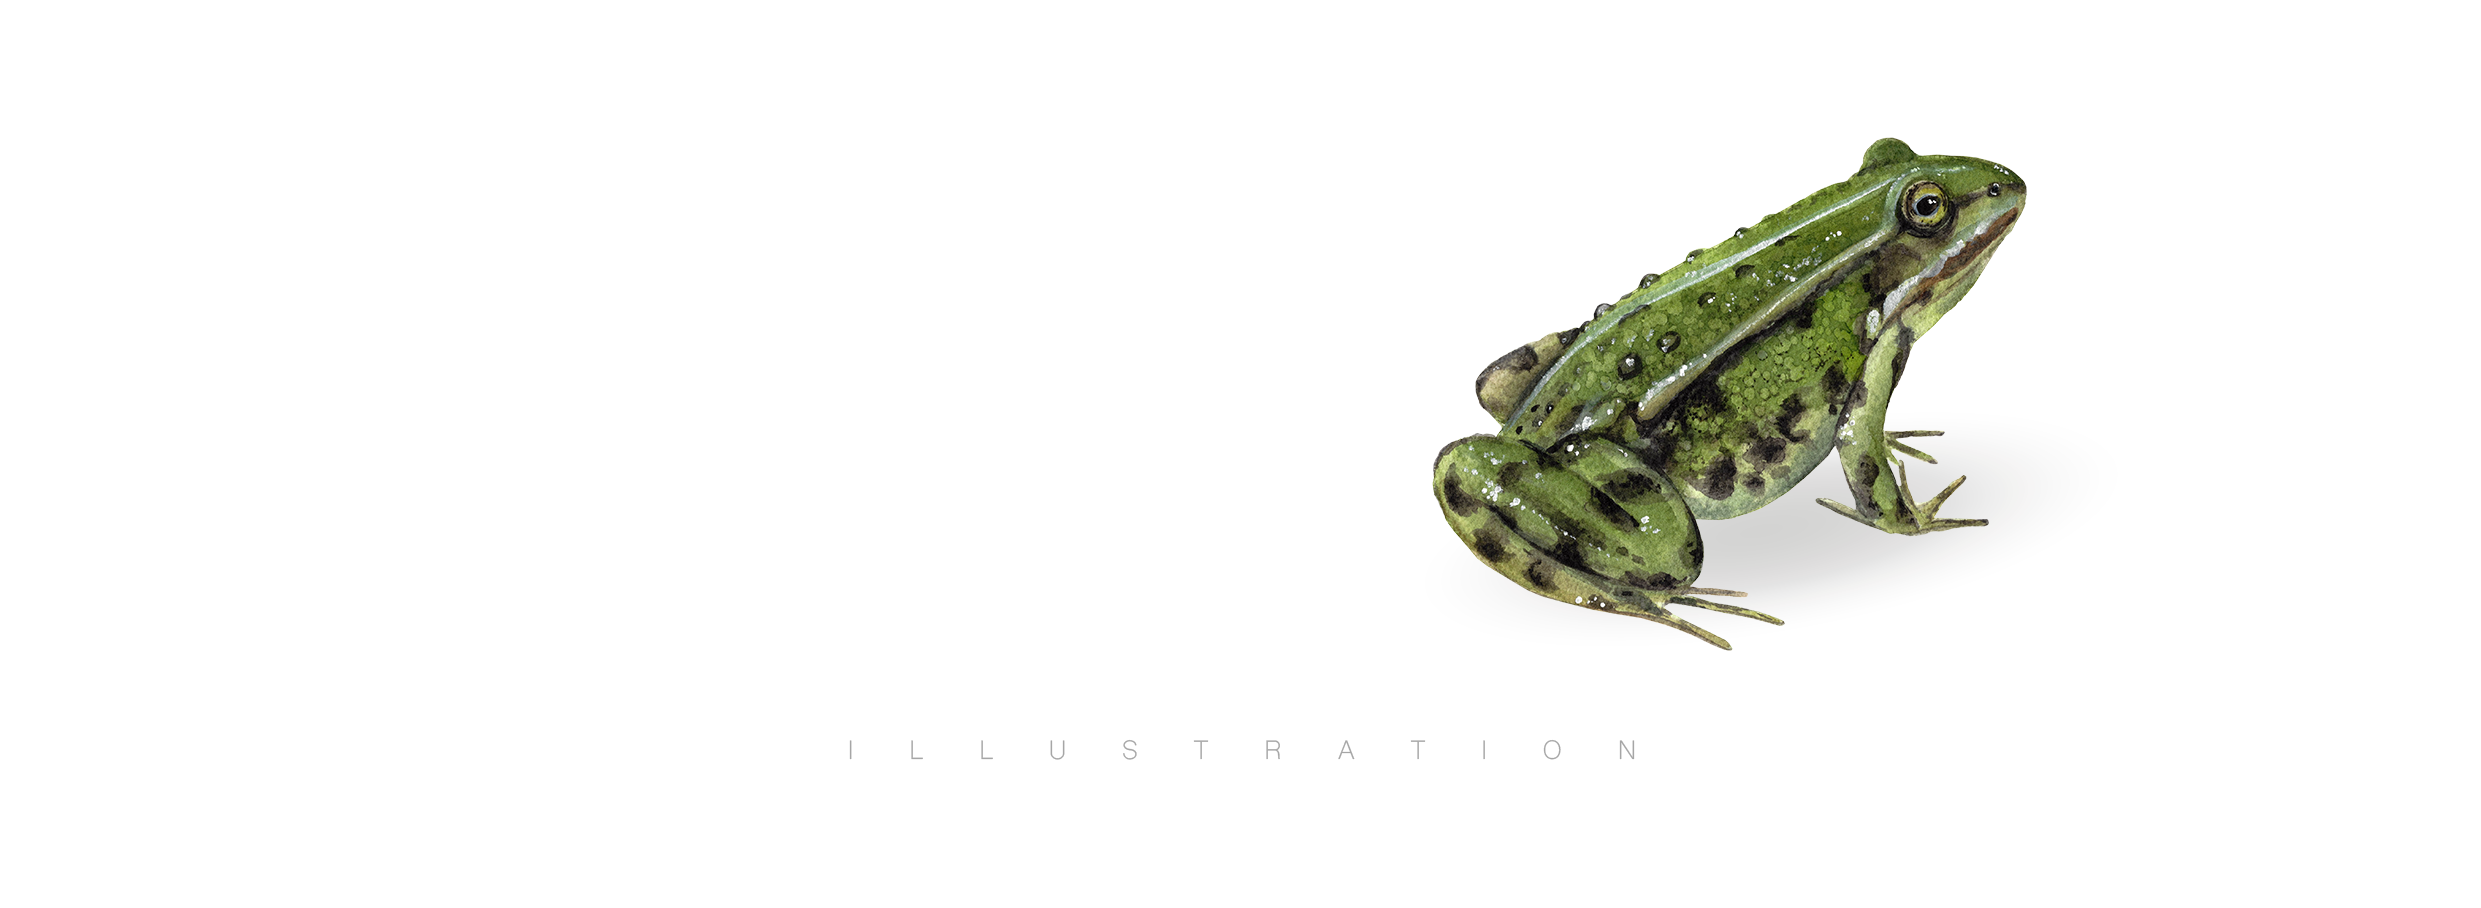 Kseniia_Eroess_Illustration_Watercolour_Frog_Slide-01